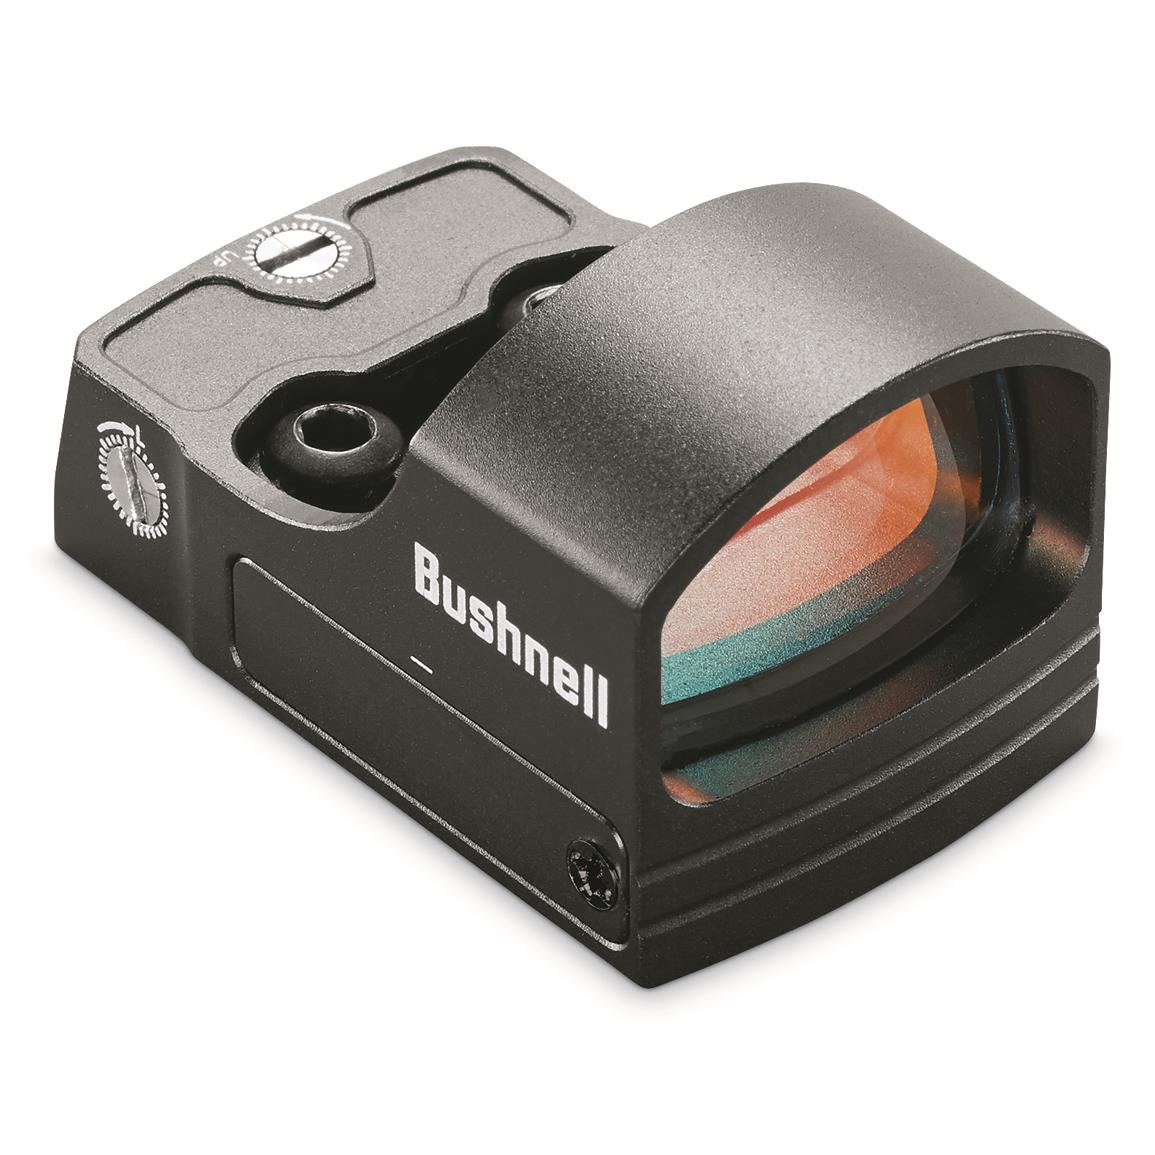 Bushnell RXS-100 Reflex Sight, 4 MOA Red Dot Reticle